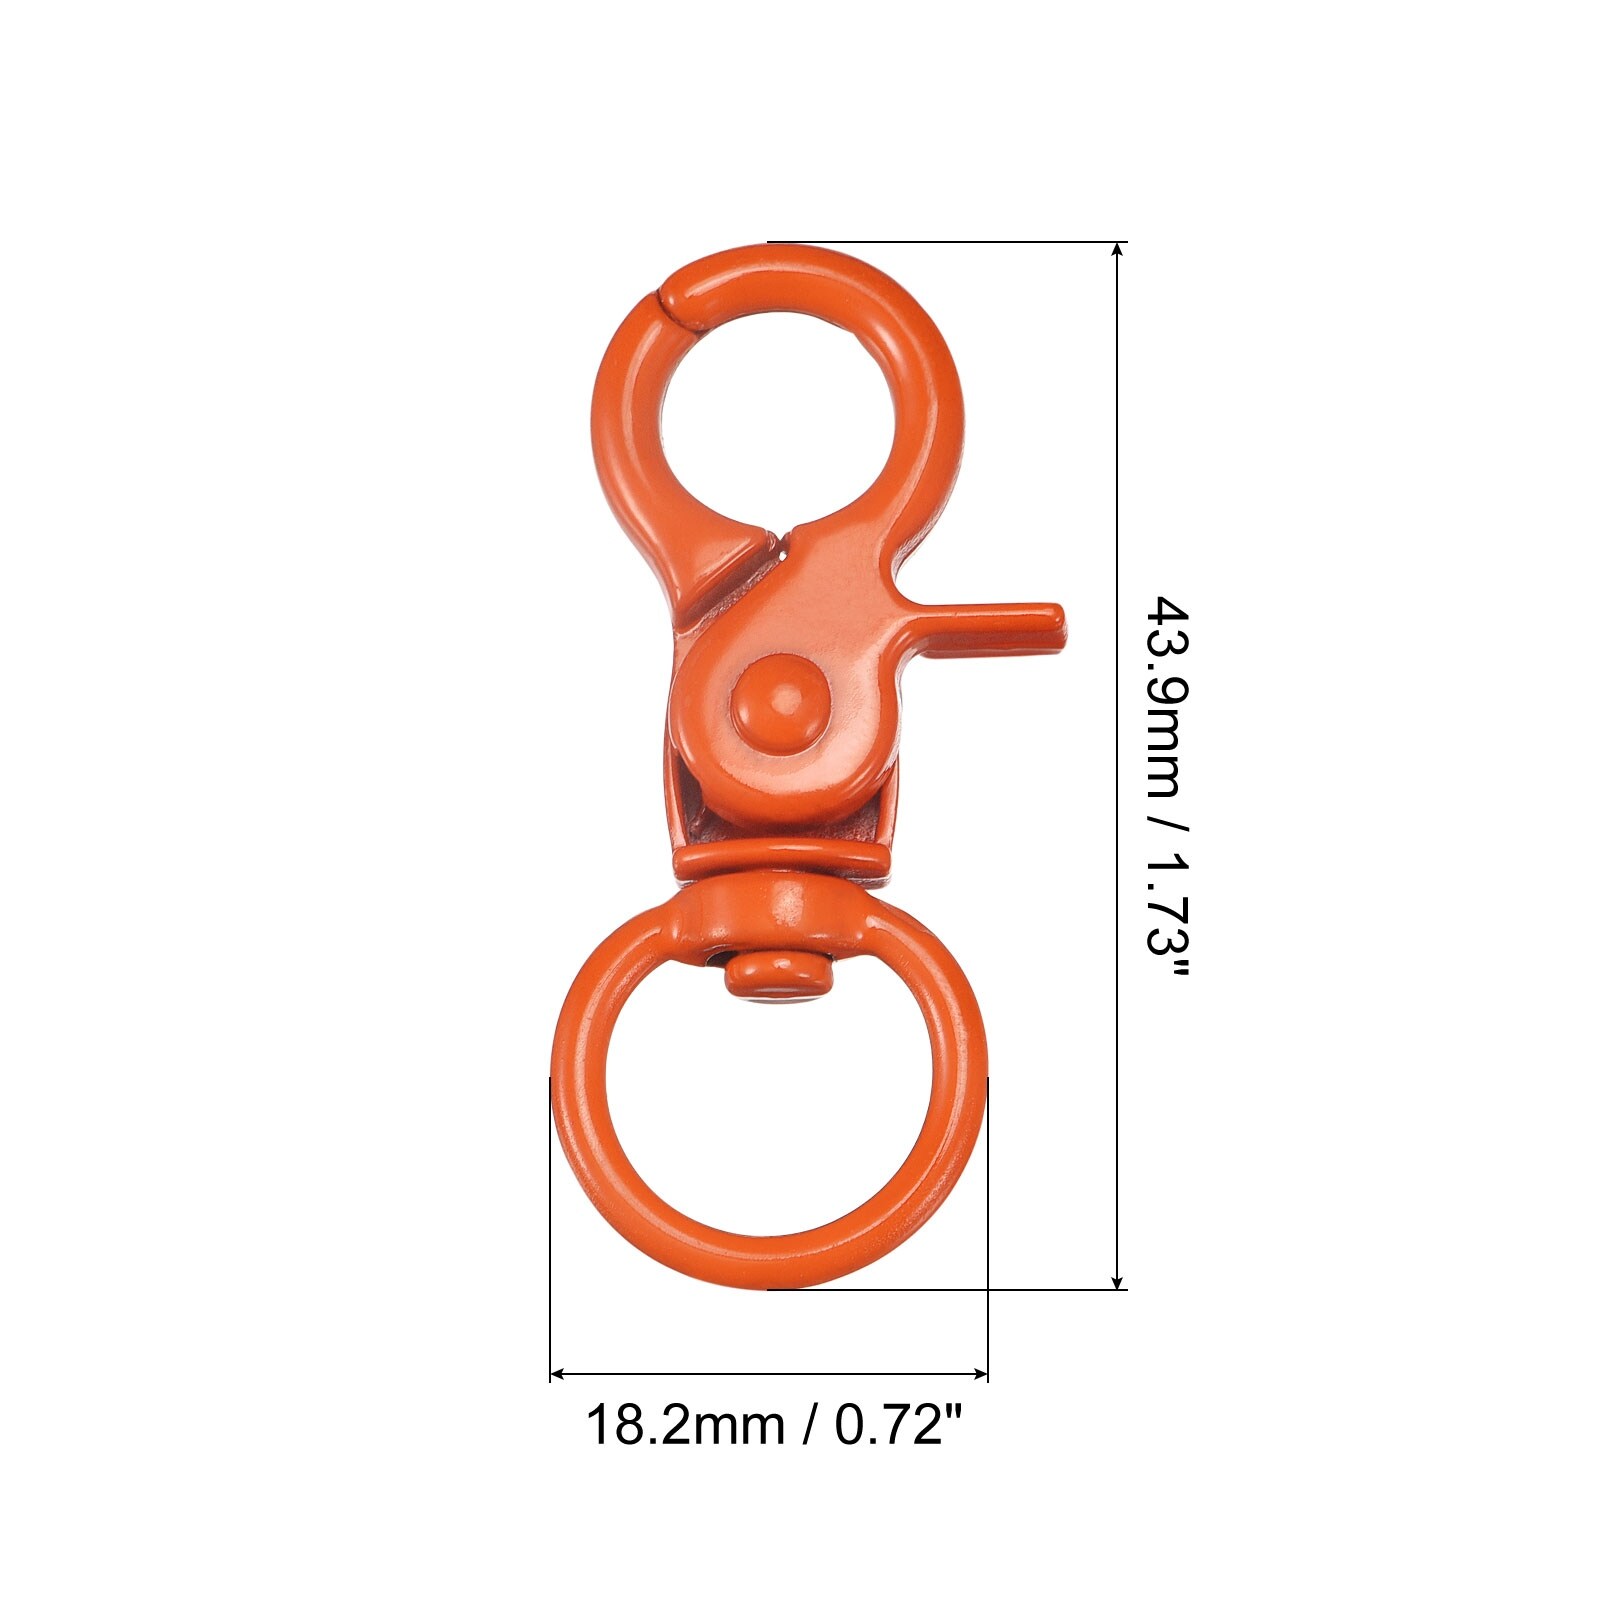 4x Swivel Lobster Claw Clasp Keychain Hooks Lanyard for Keys